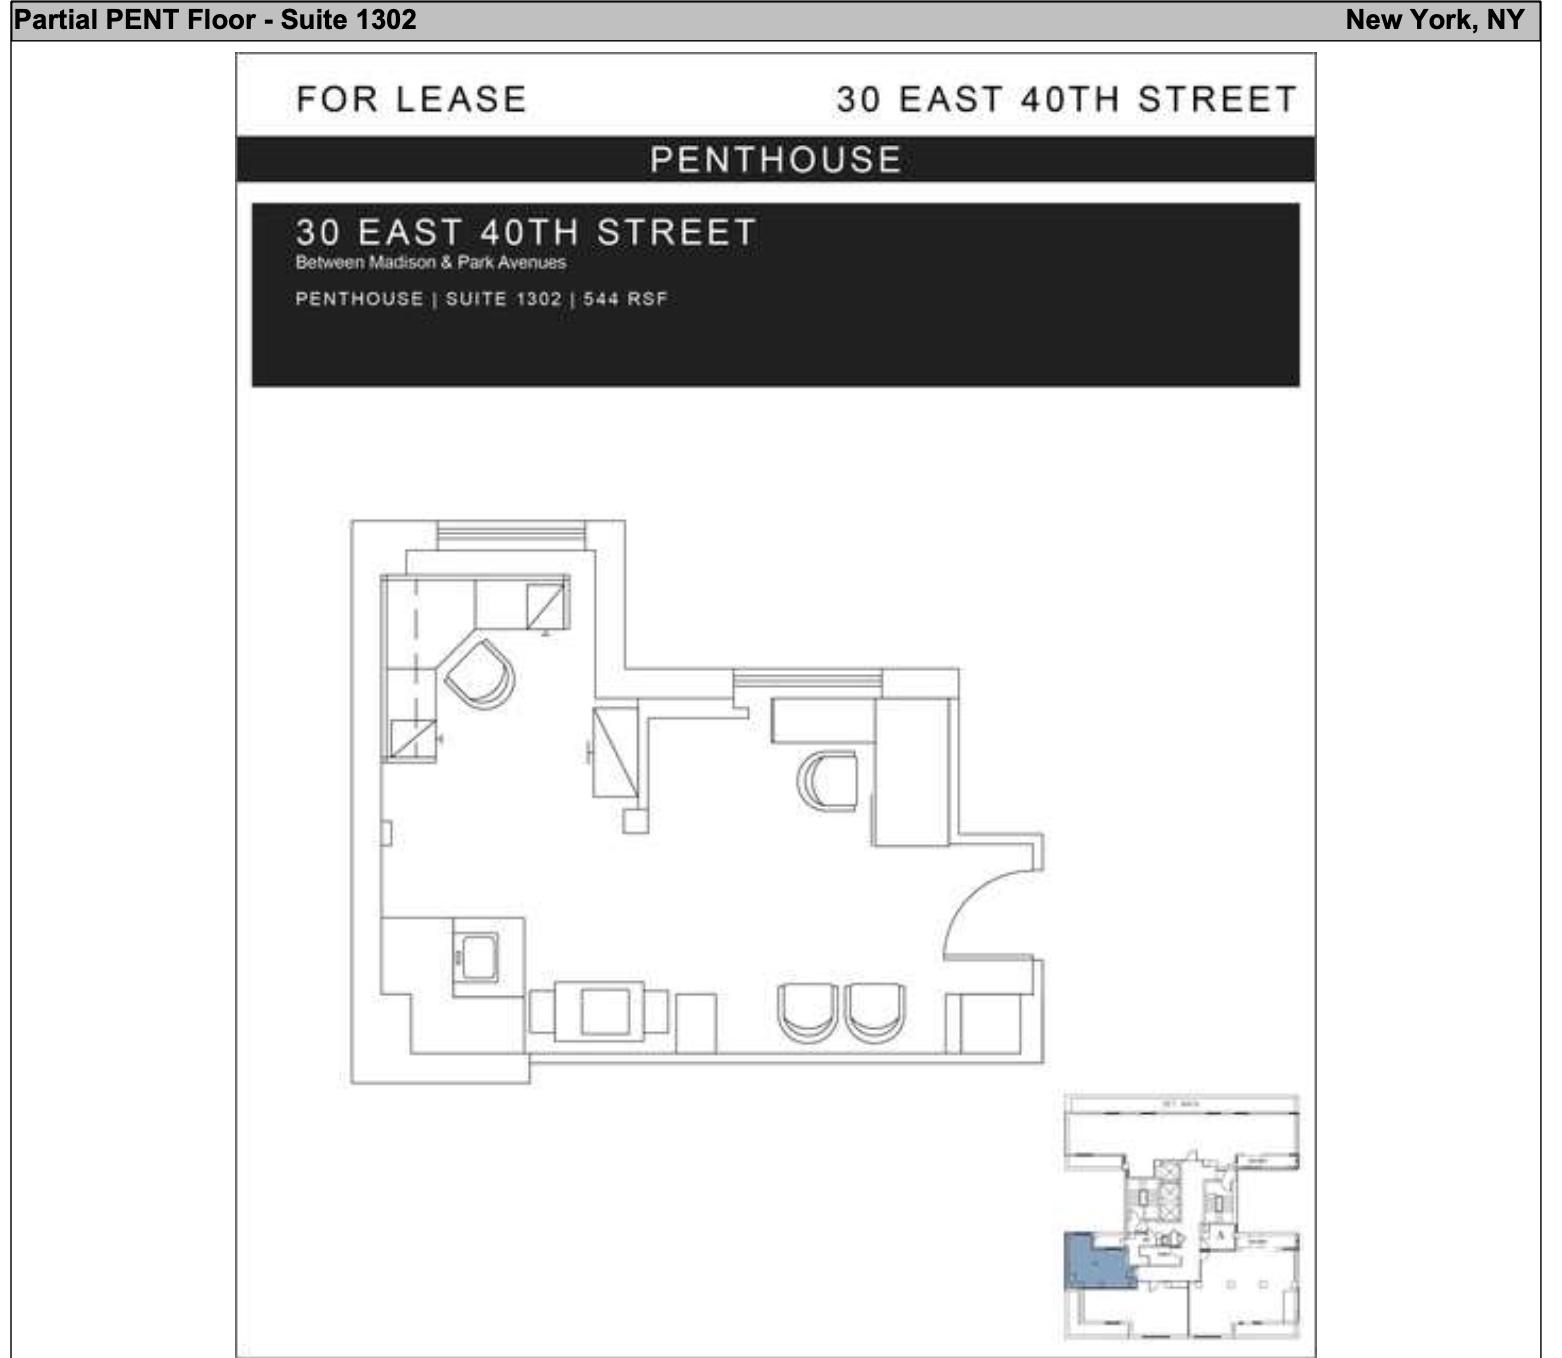 Floor plan of 30 East 40th Street medical office space, NYC